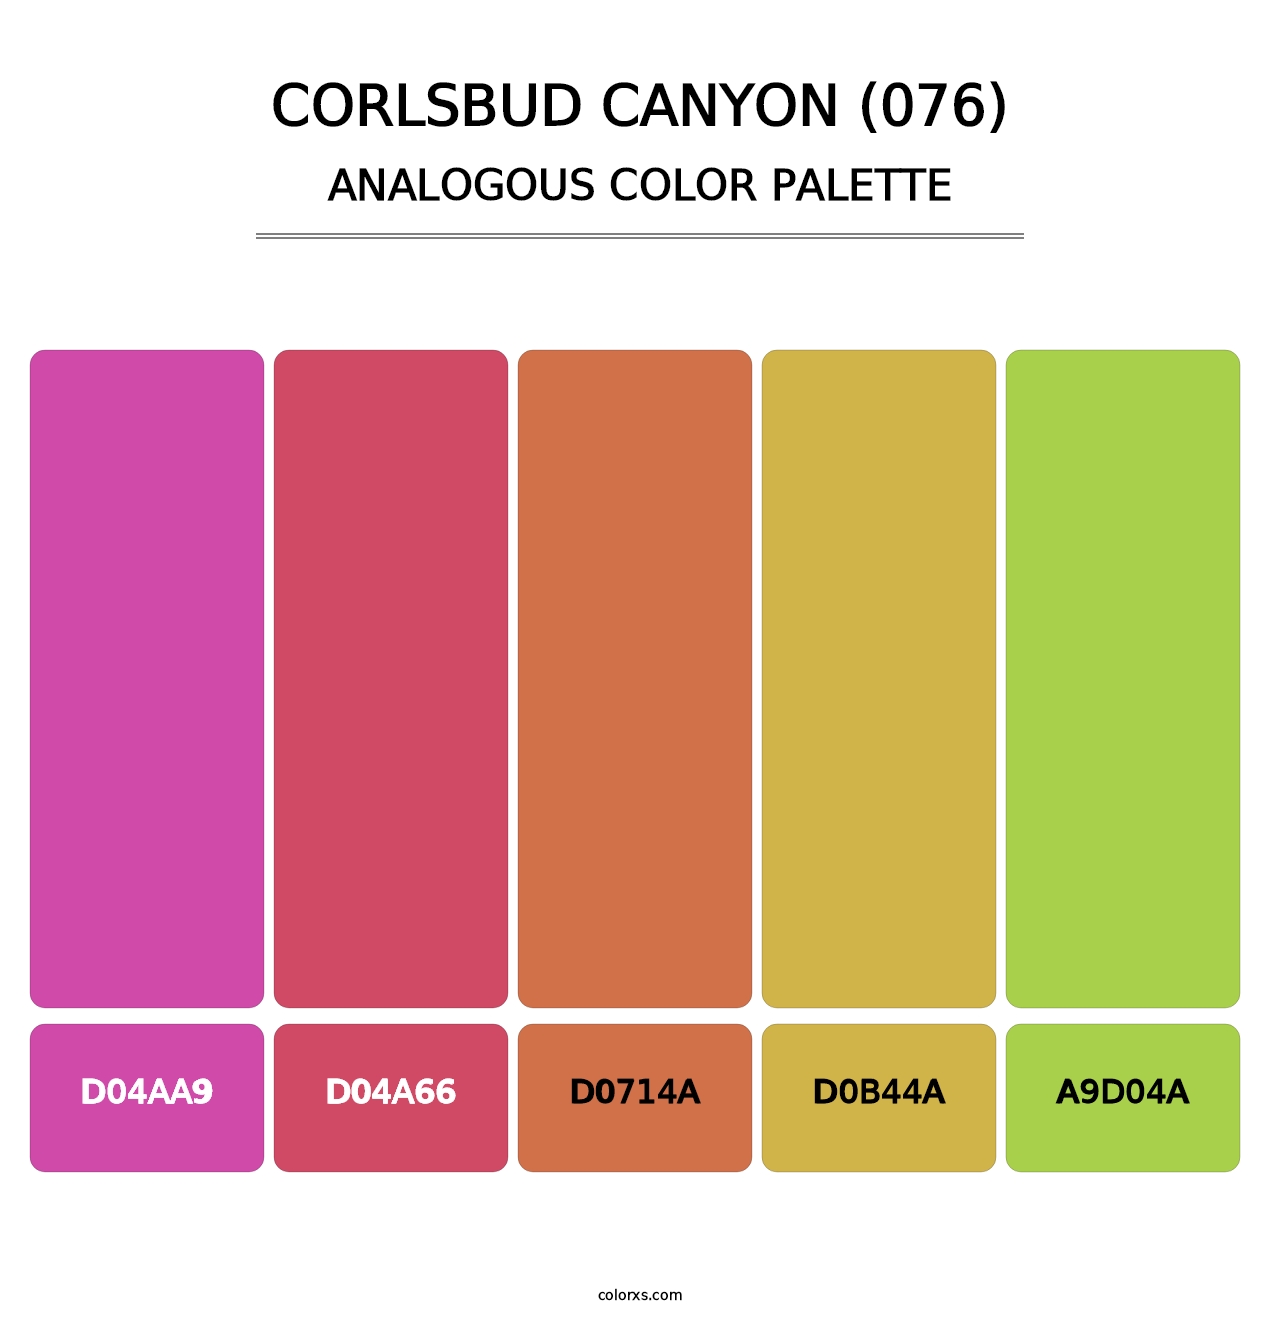 Corlsbud Canyon (076) - Analogous Color Palette